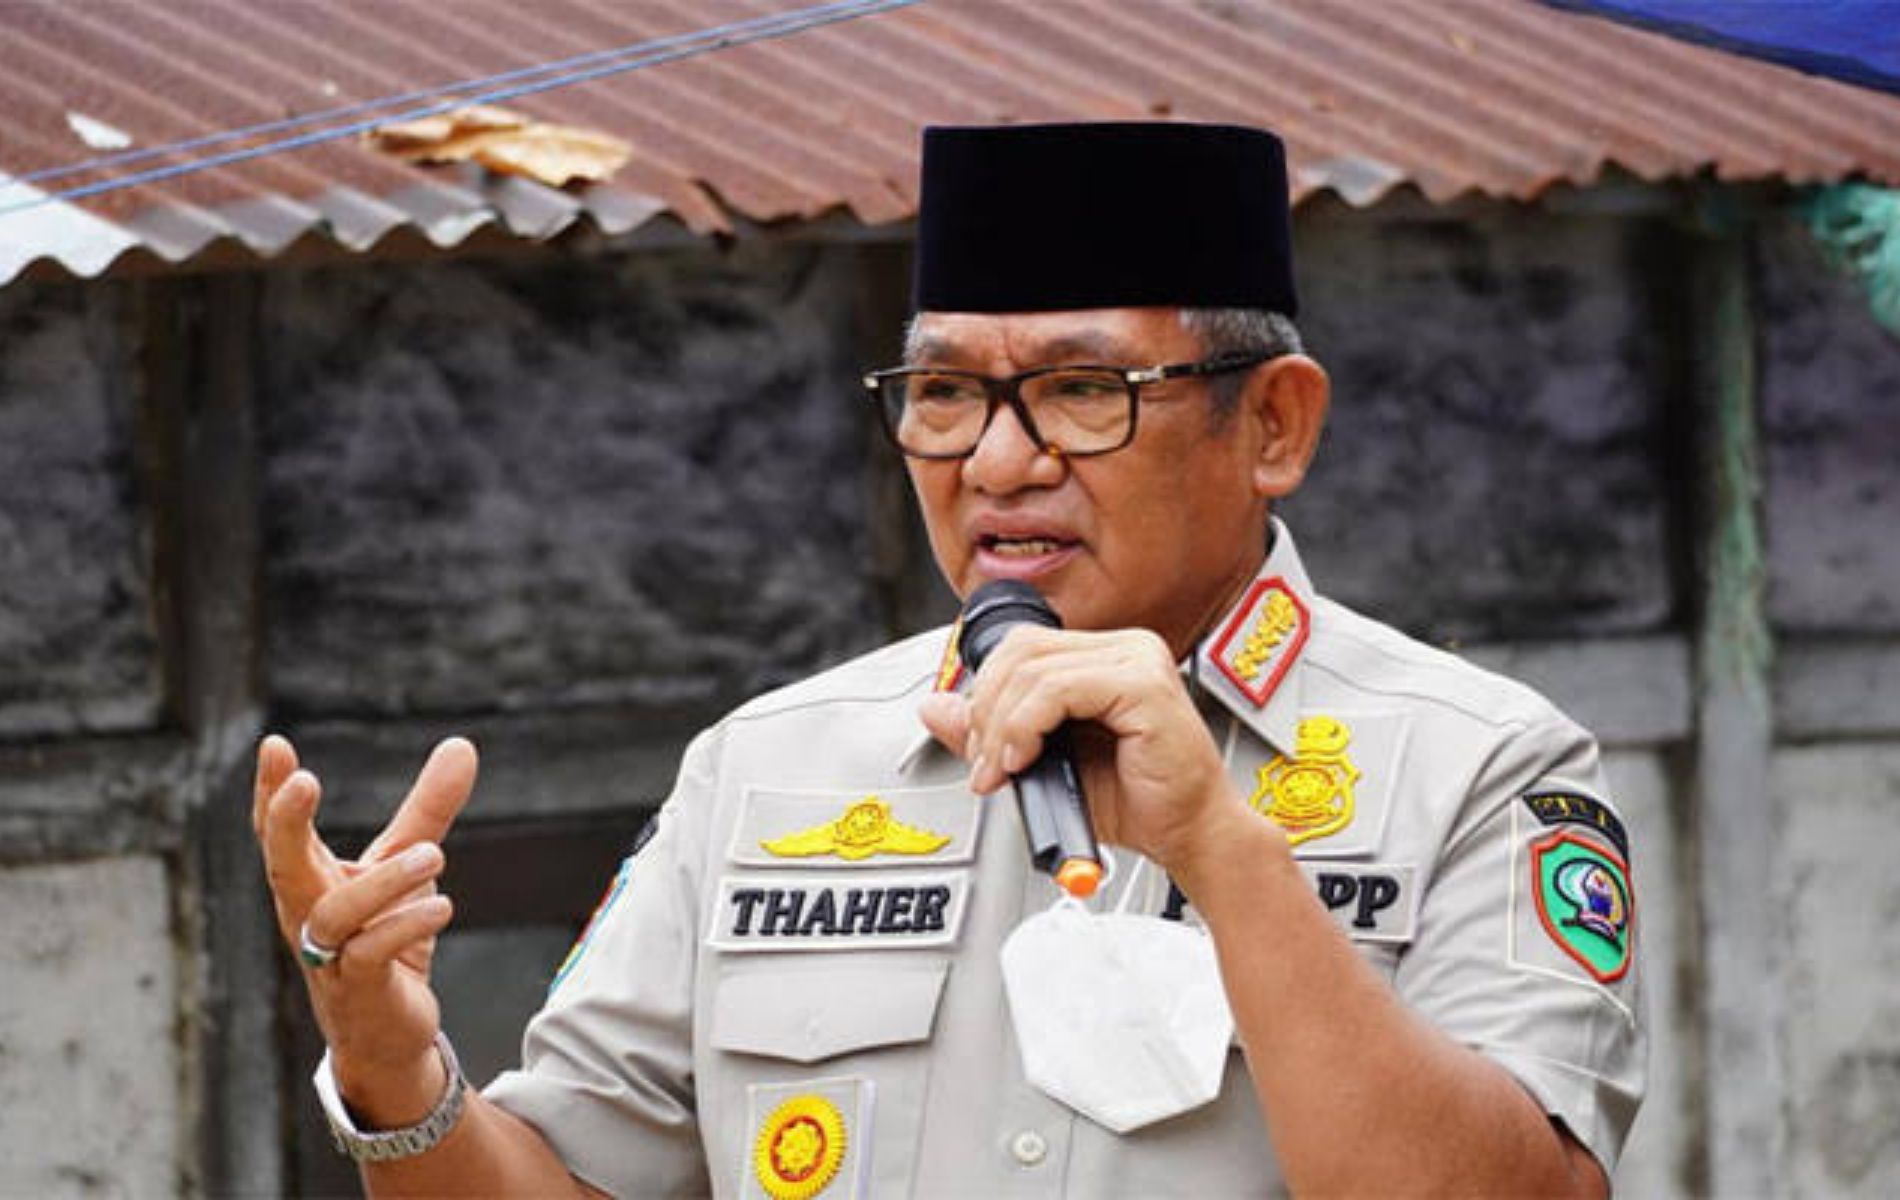 Wajah pelaku pemerkosaan Bupati Maluku Tenggara M Thaher Hanubun. Ia berulang kali lakukan kekerasan seksual ke pegawai kafe milik istrinya.